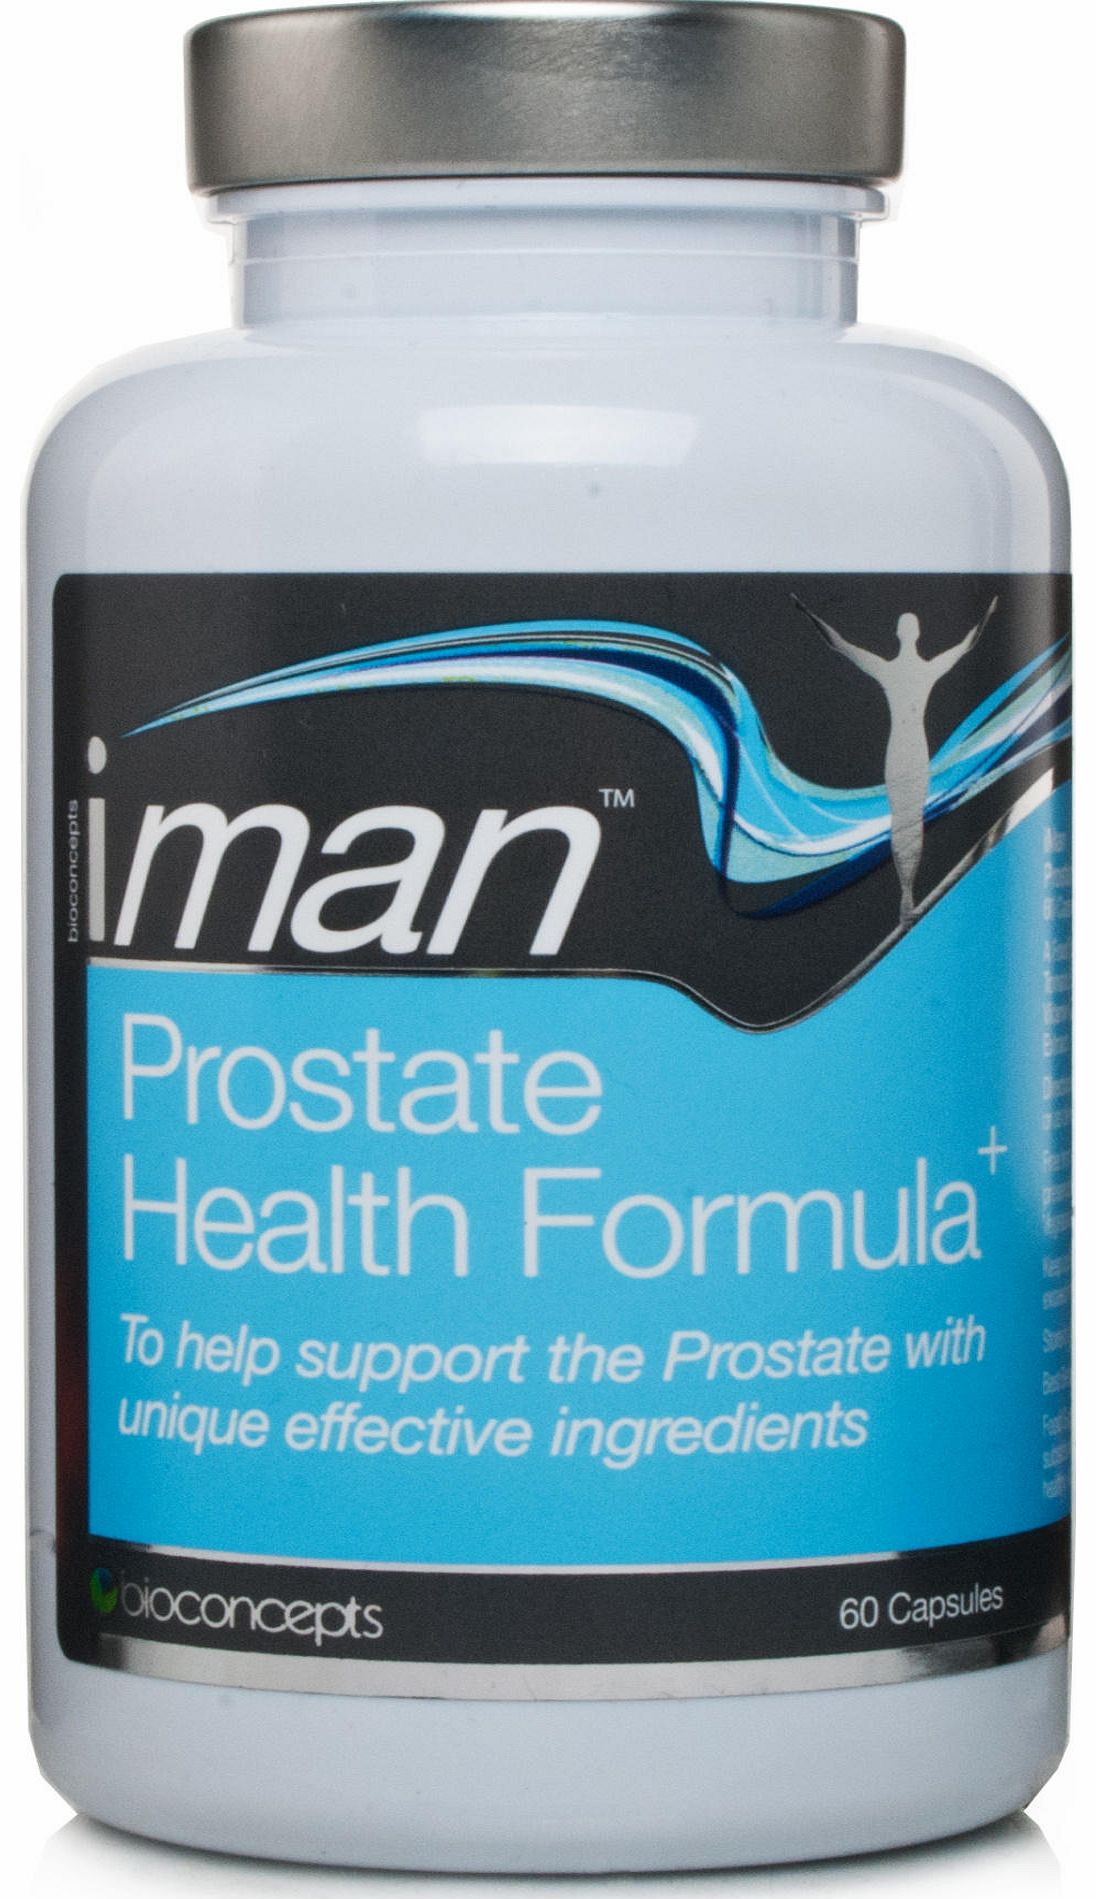 iman Prostate Health Formula +